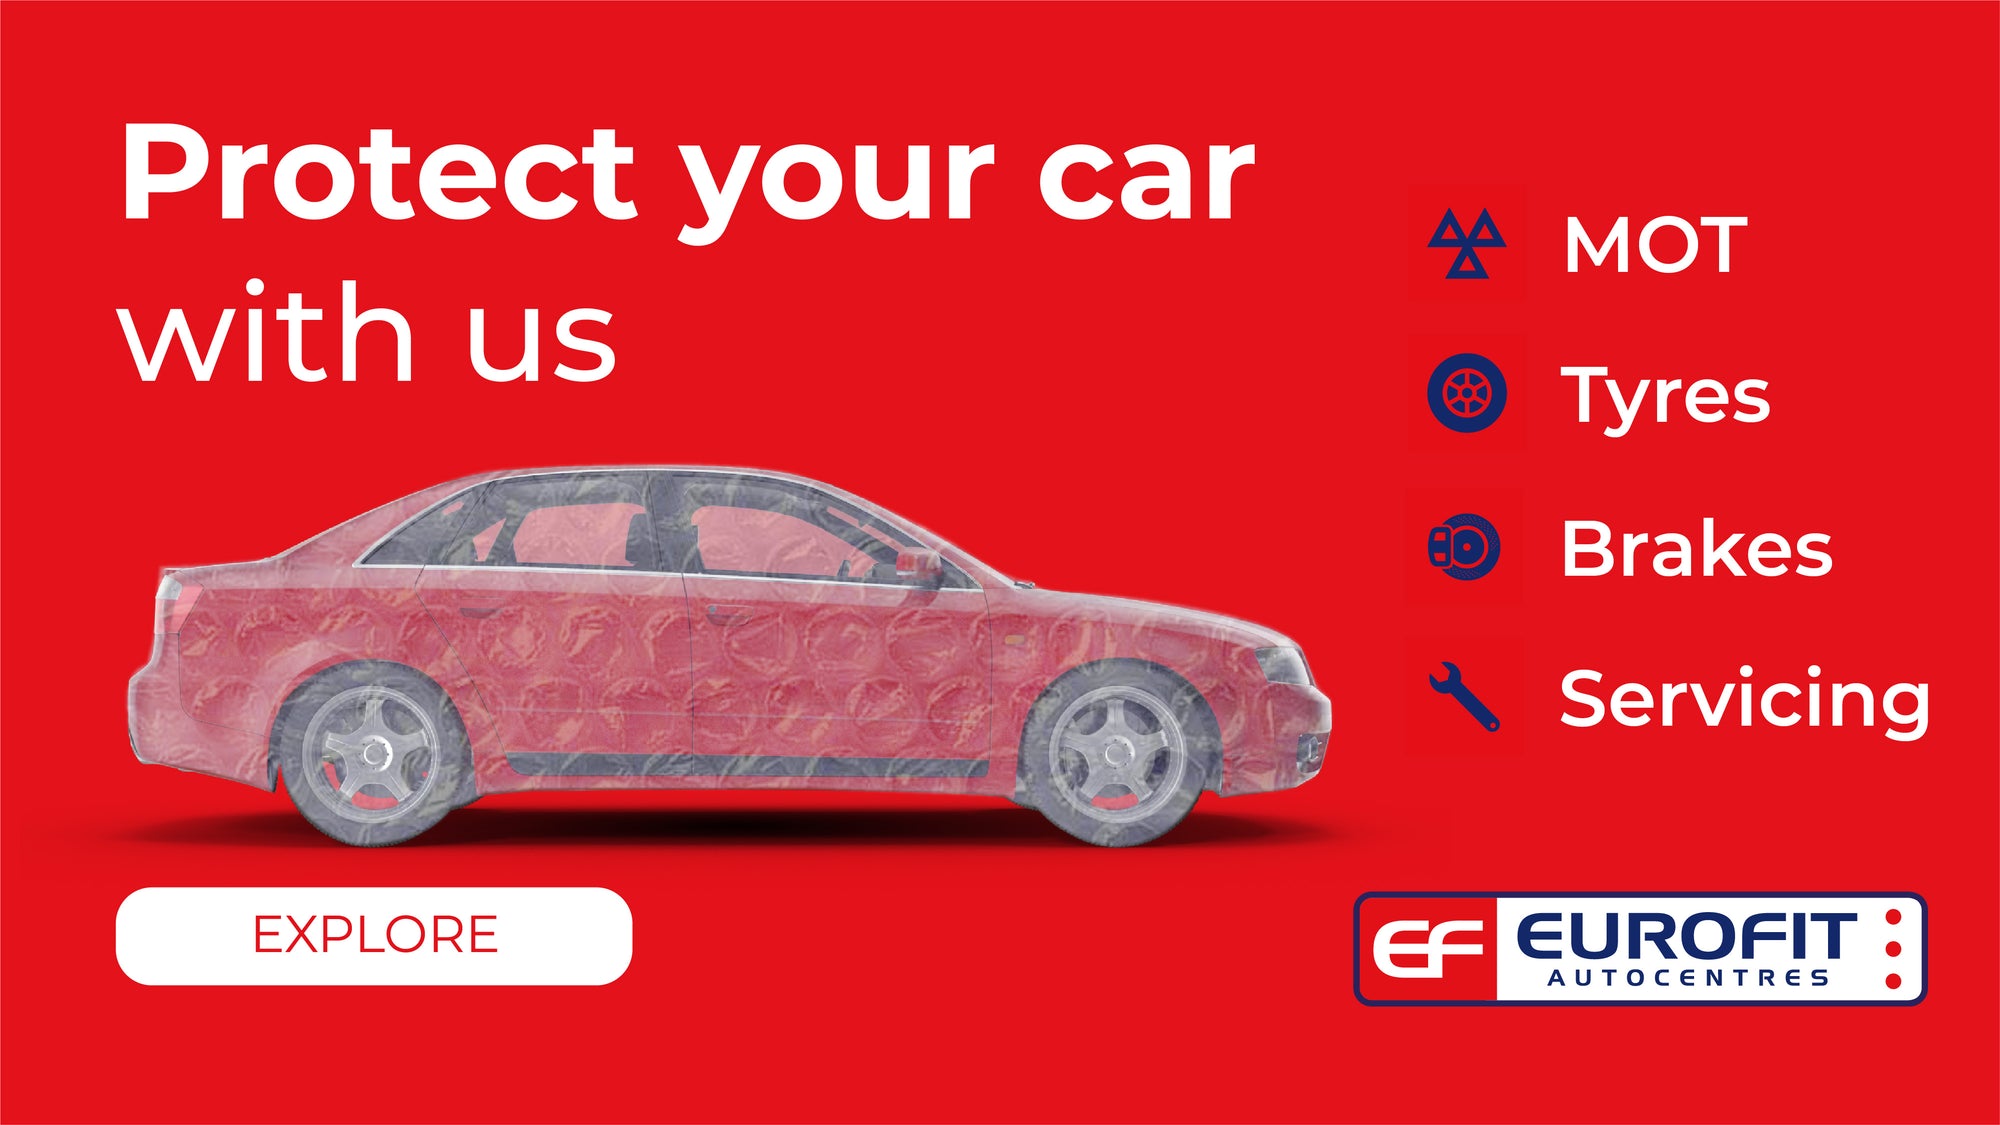 Protect your car with eurofit autocentres. MOT, TYRES, BRAKES & SERVICING